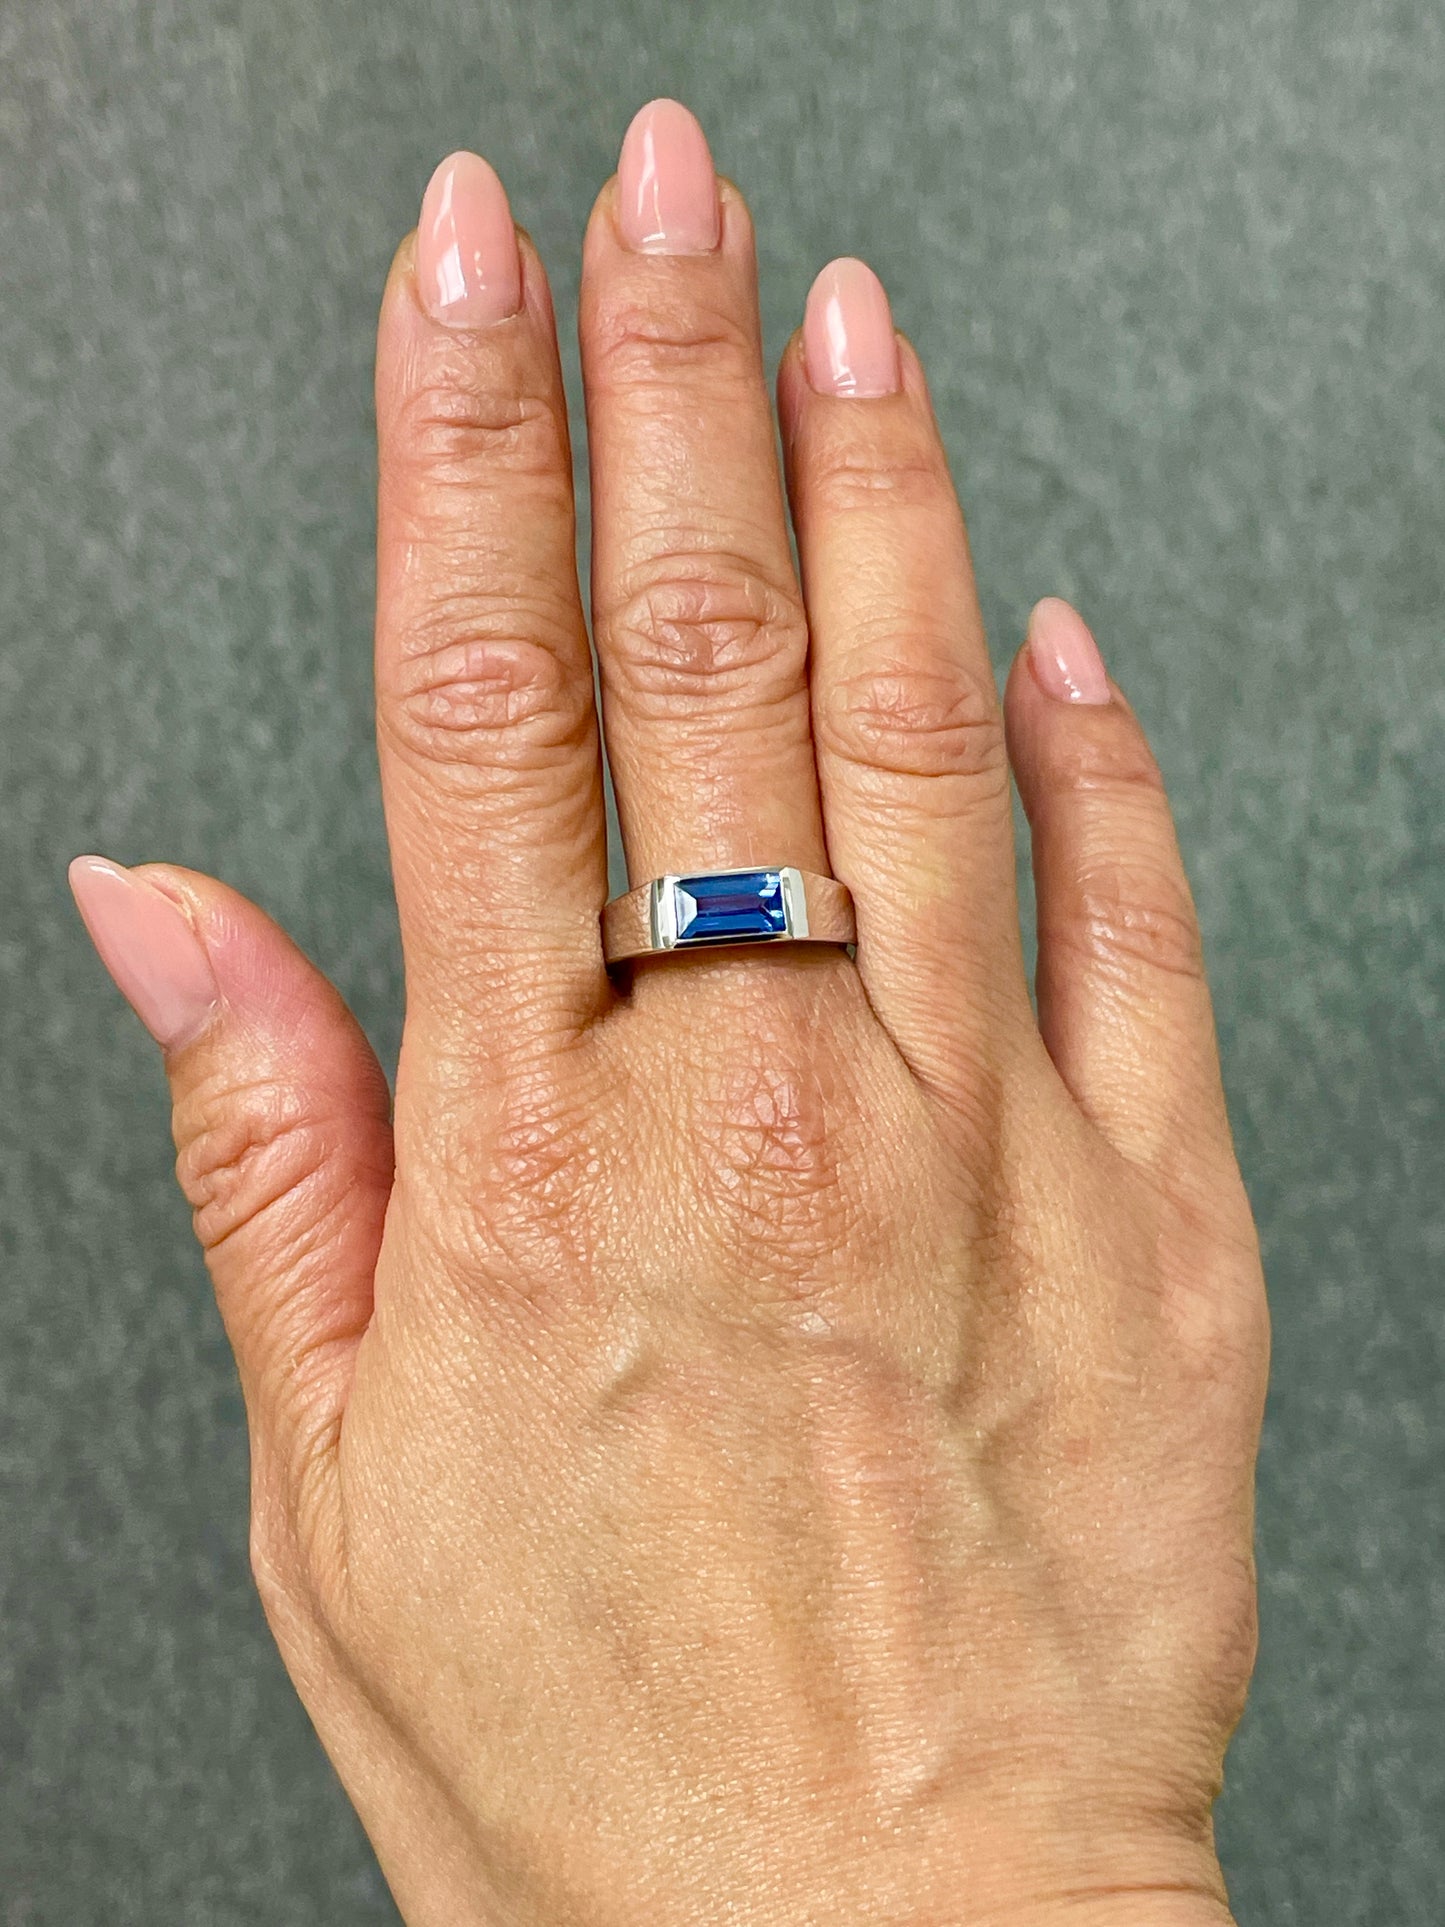 1.66 Carat Sapphire Signet Ring